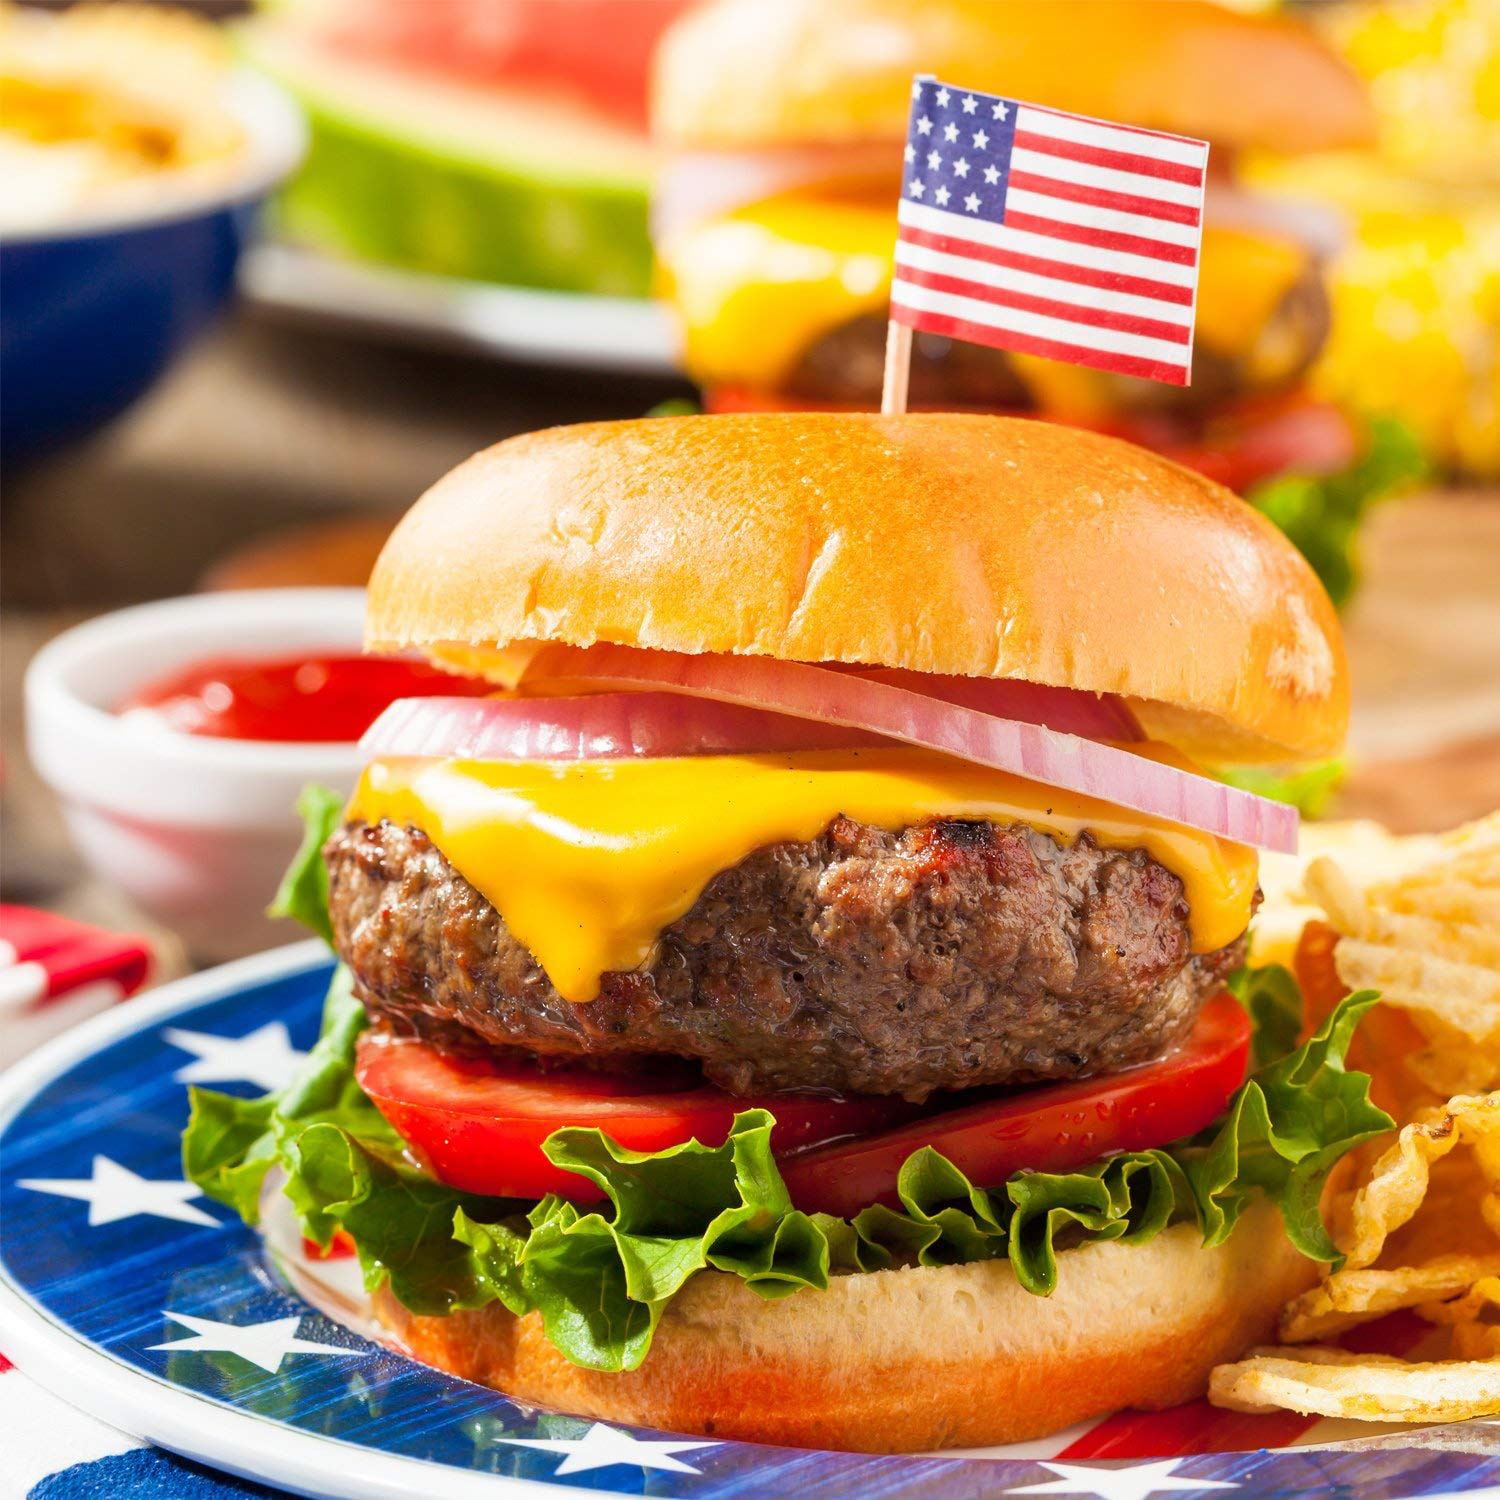 30 American USA US Sandwich Party Flag Food Cake Cocktail Sticks Picks America